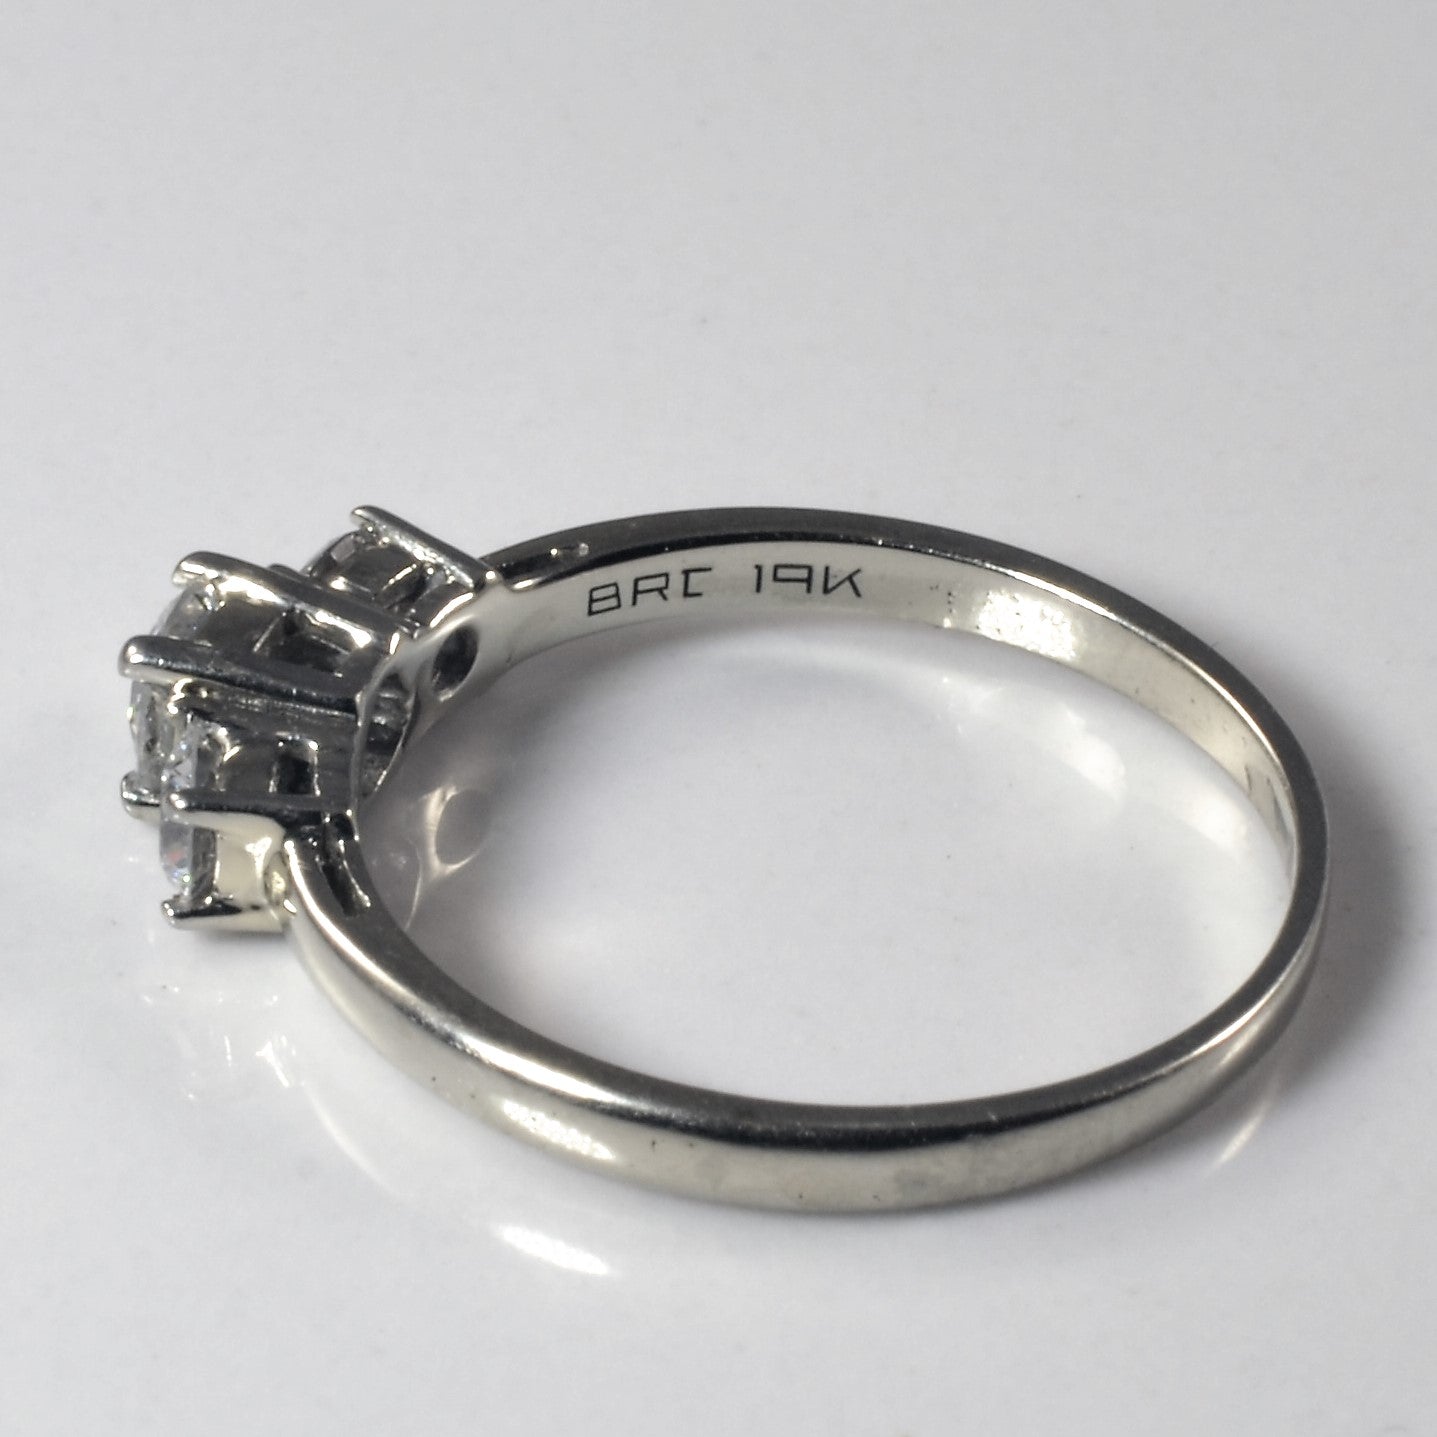 Three Stone Diamond Ring | 0.51ctw | SZ 6.5 |